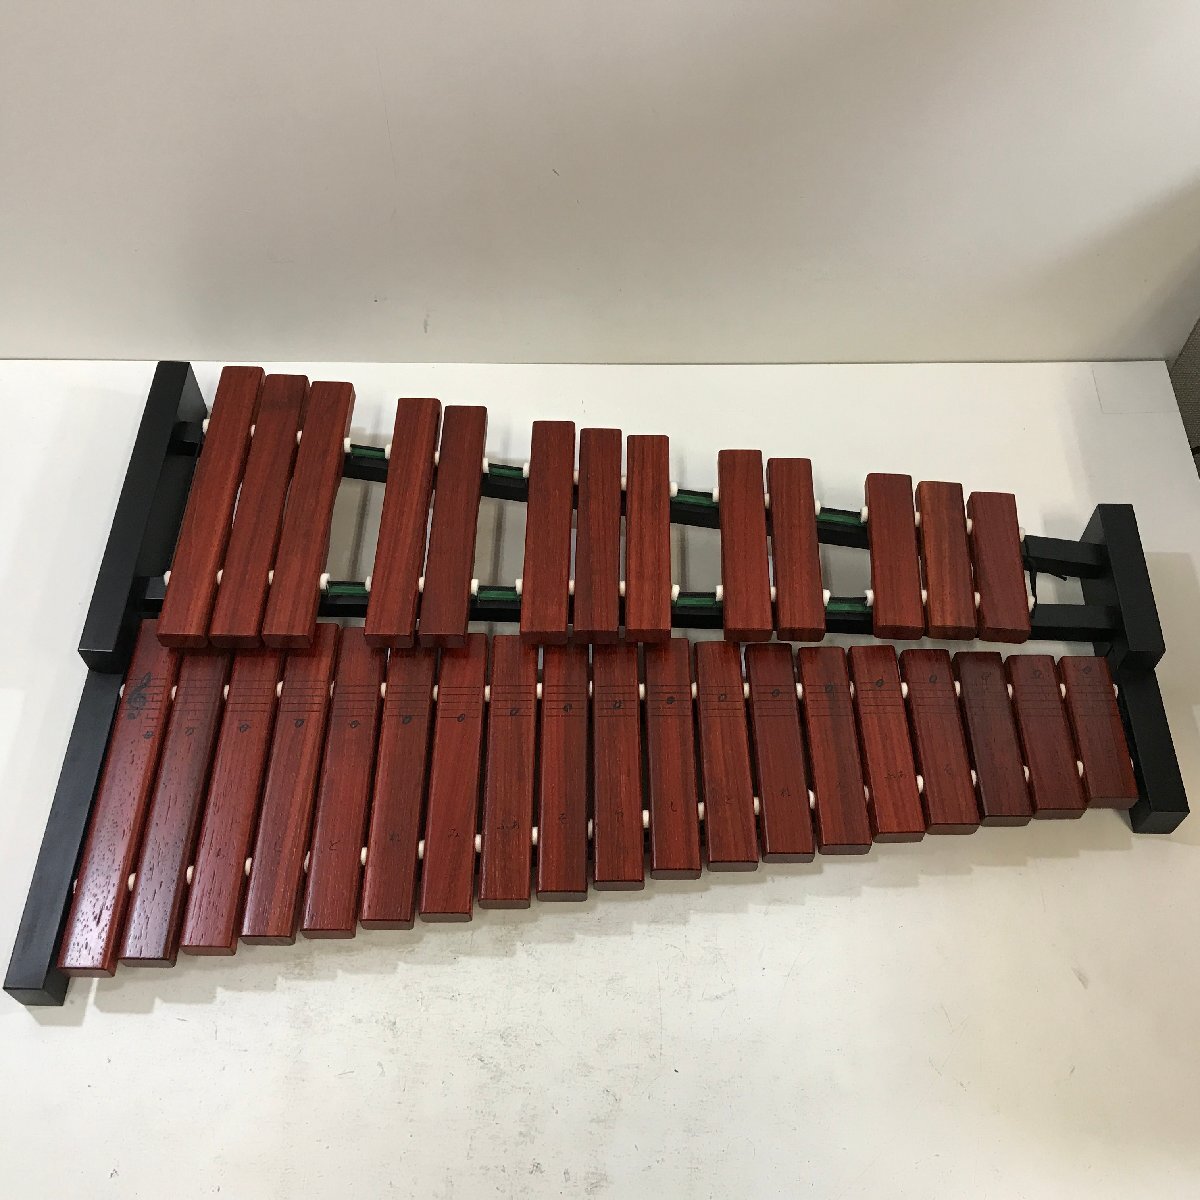 YAMAHA xylophone 32 key xylophone Yamaha keyboard percussion instruments width 68cm desk receipt possible *